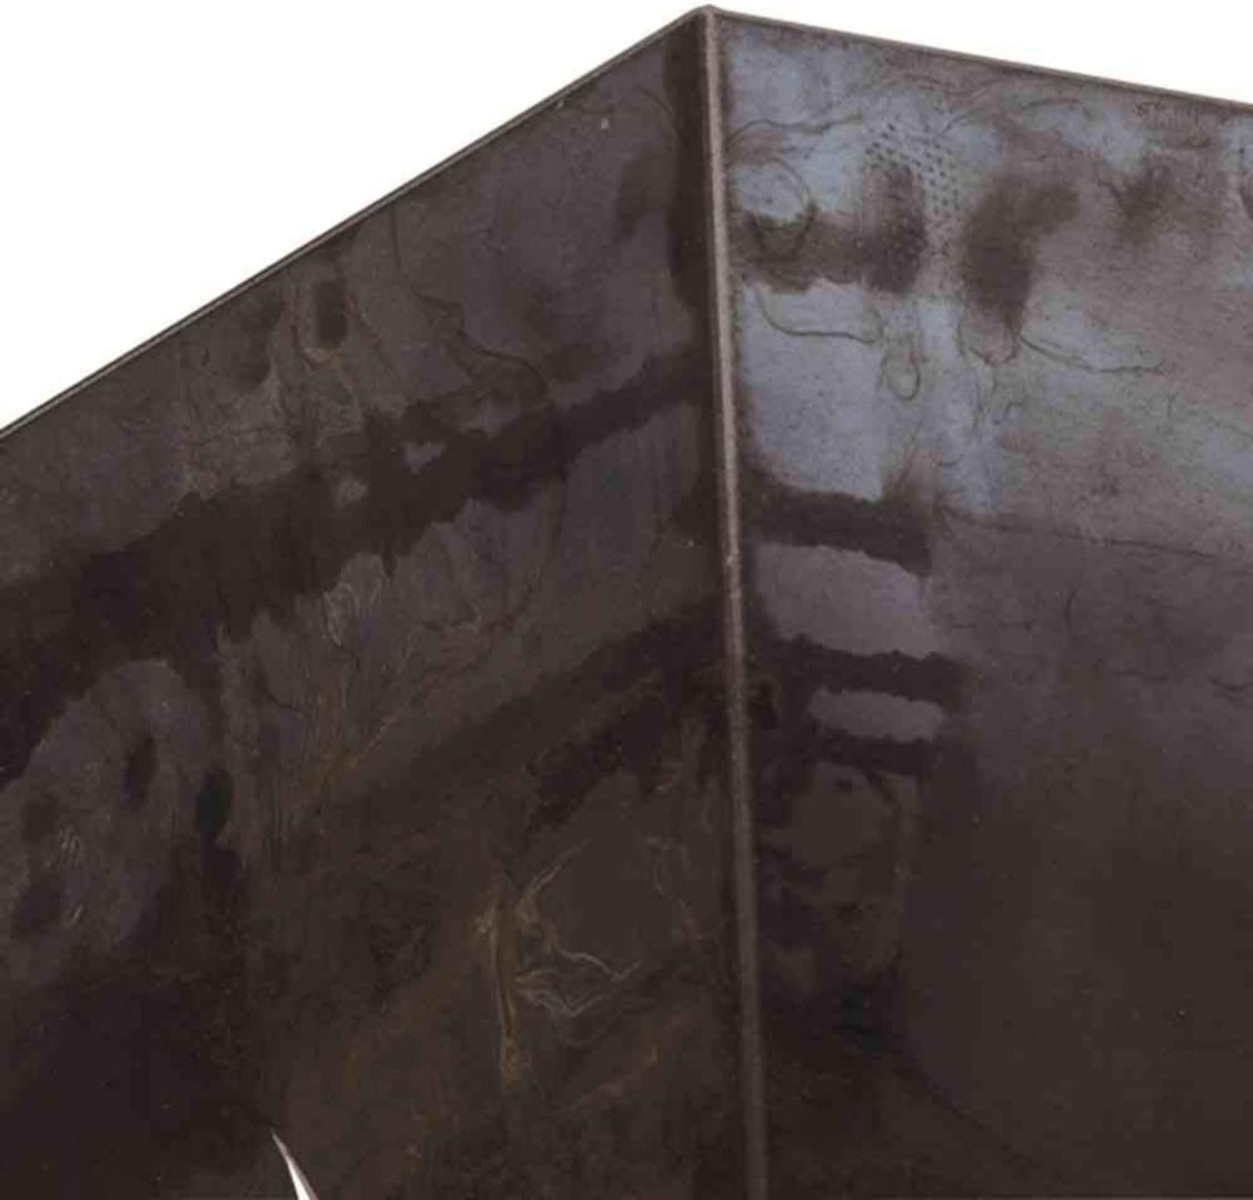 GOMAZING Feuerkorb aus Stahl (anthrazit, 50x50x60cm) Feuertonne, grau